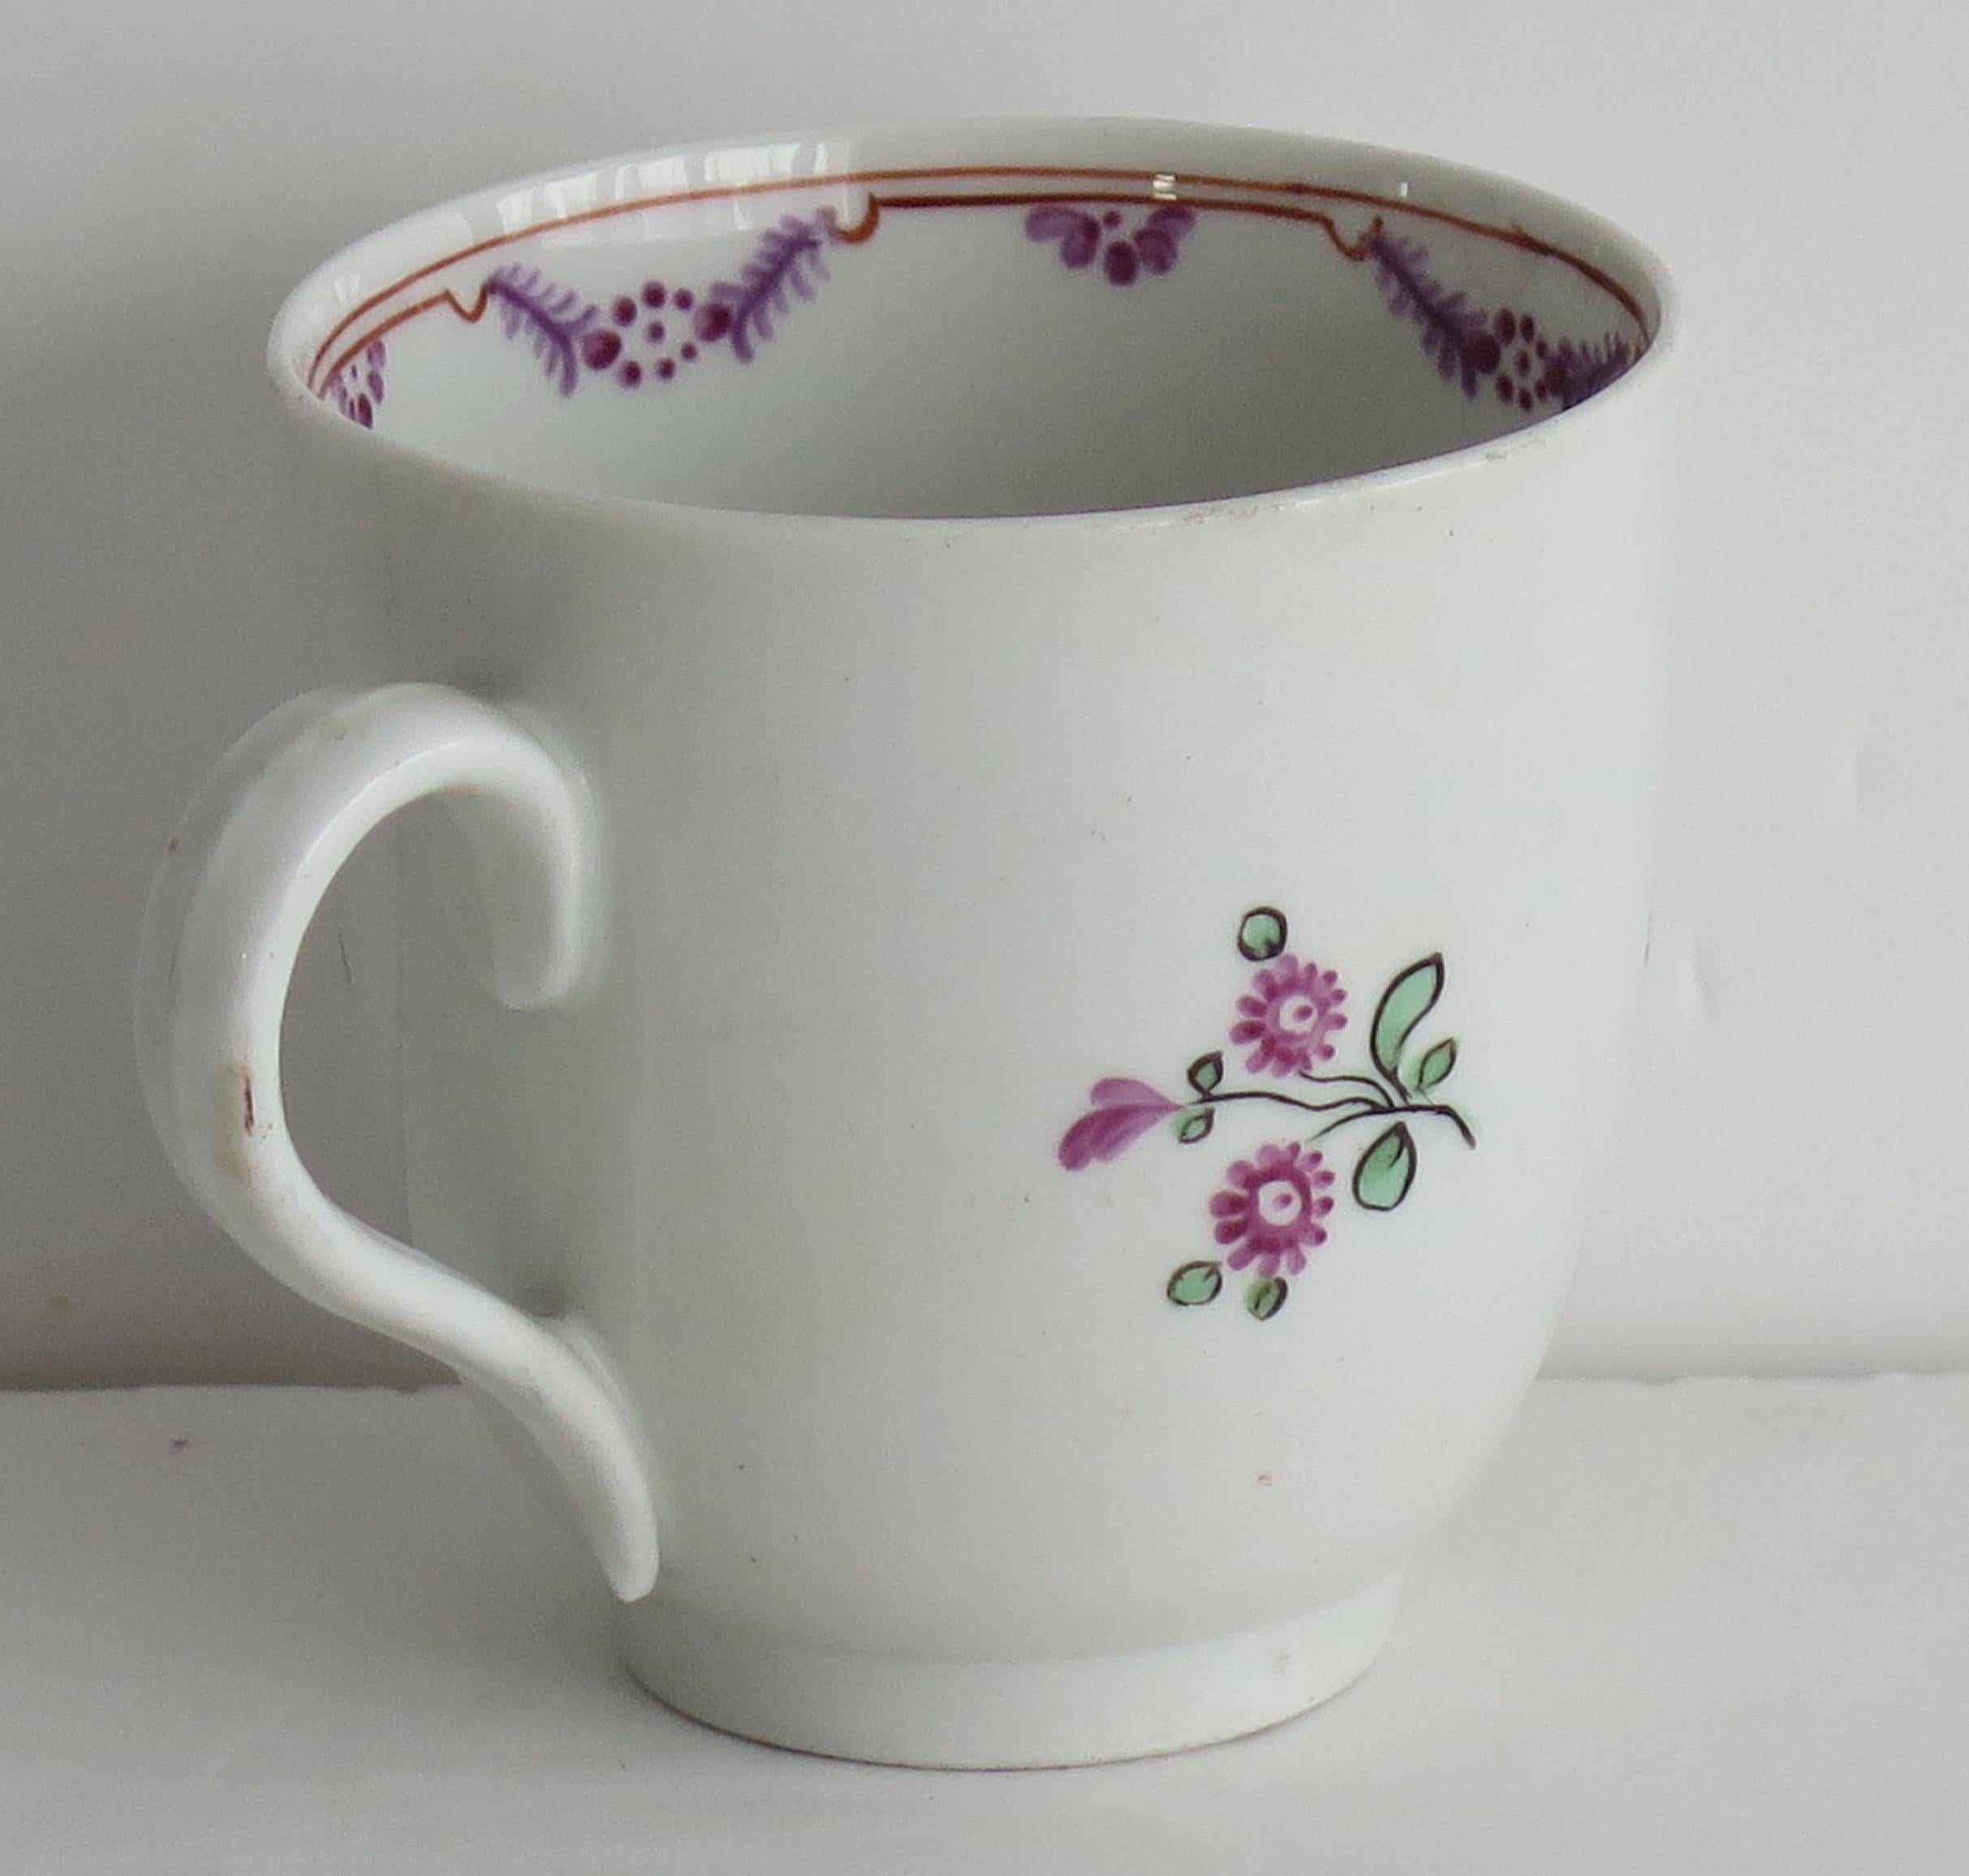 18th century mugs